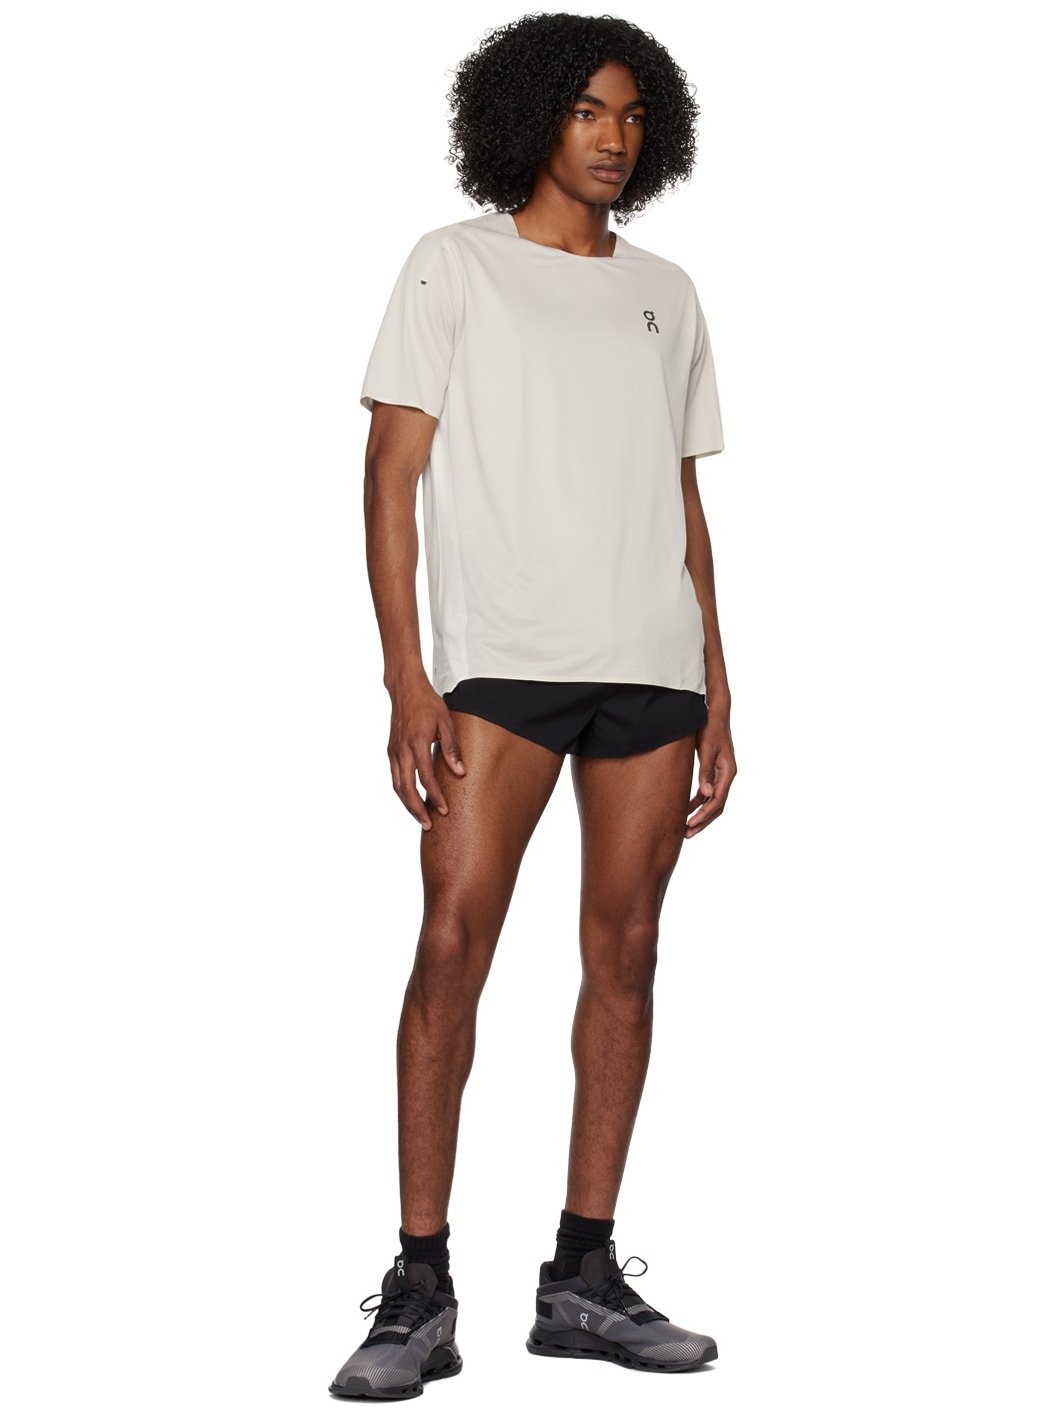 Black Race Shorts - 4